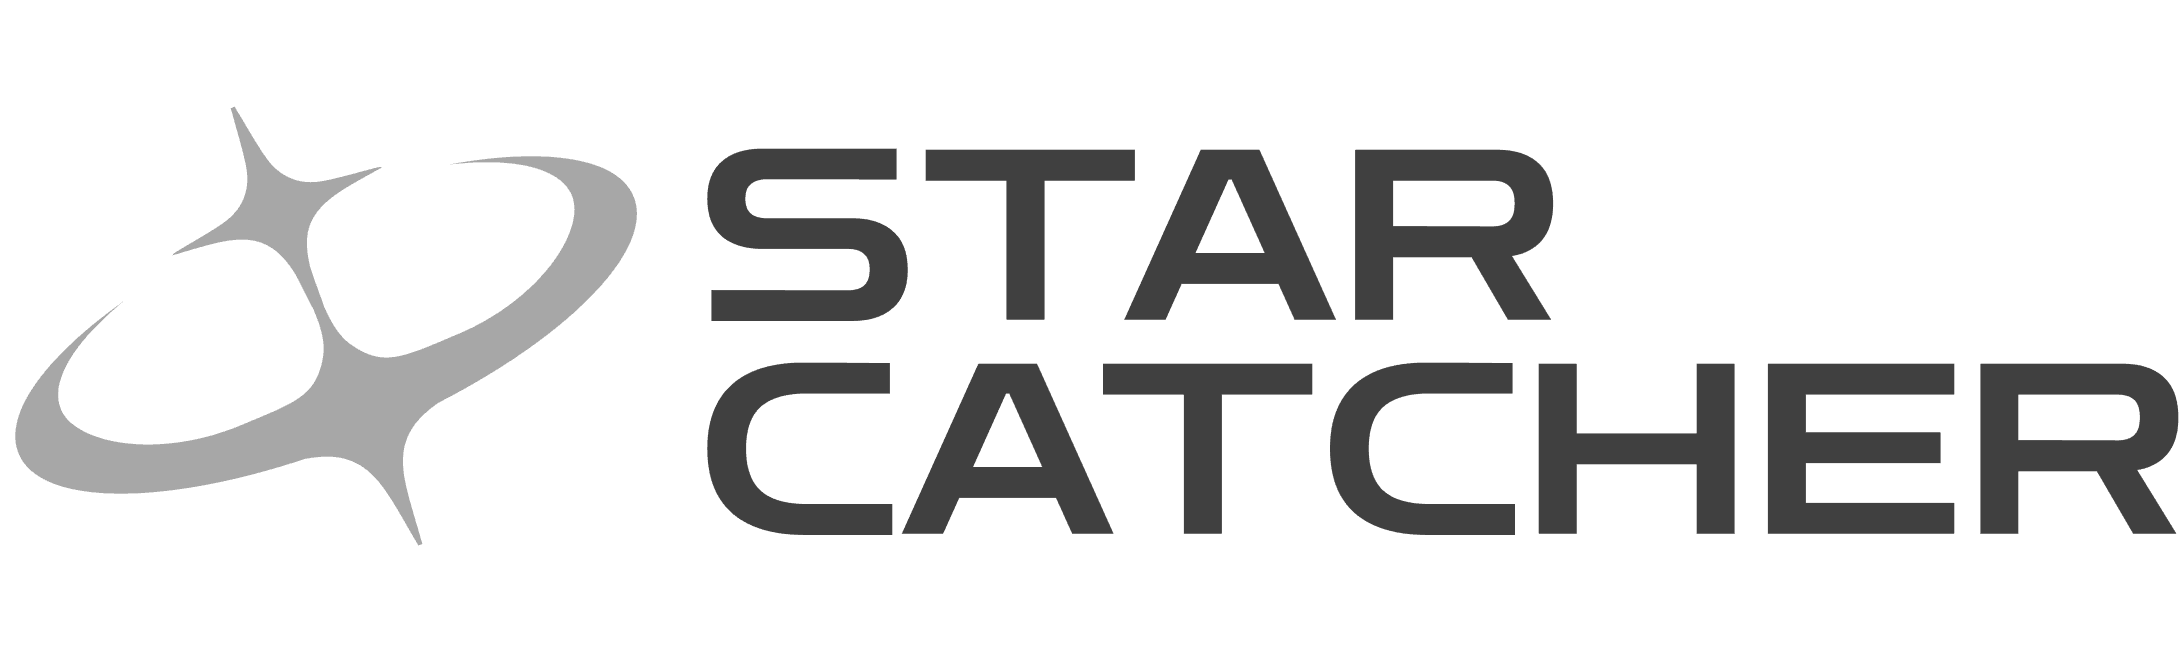 Star Catcher Logo.png